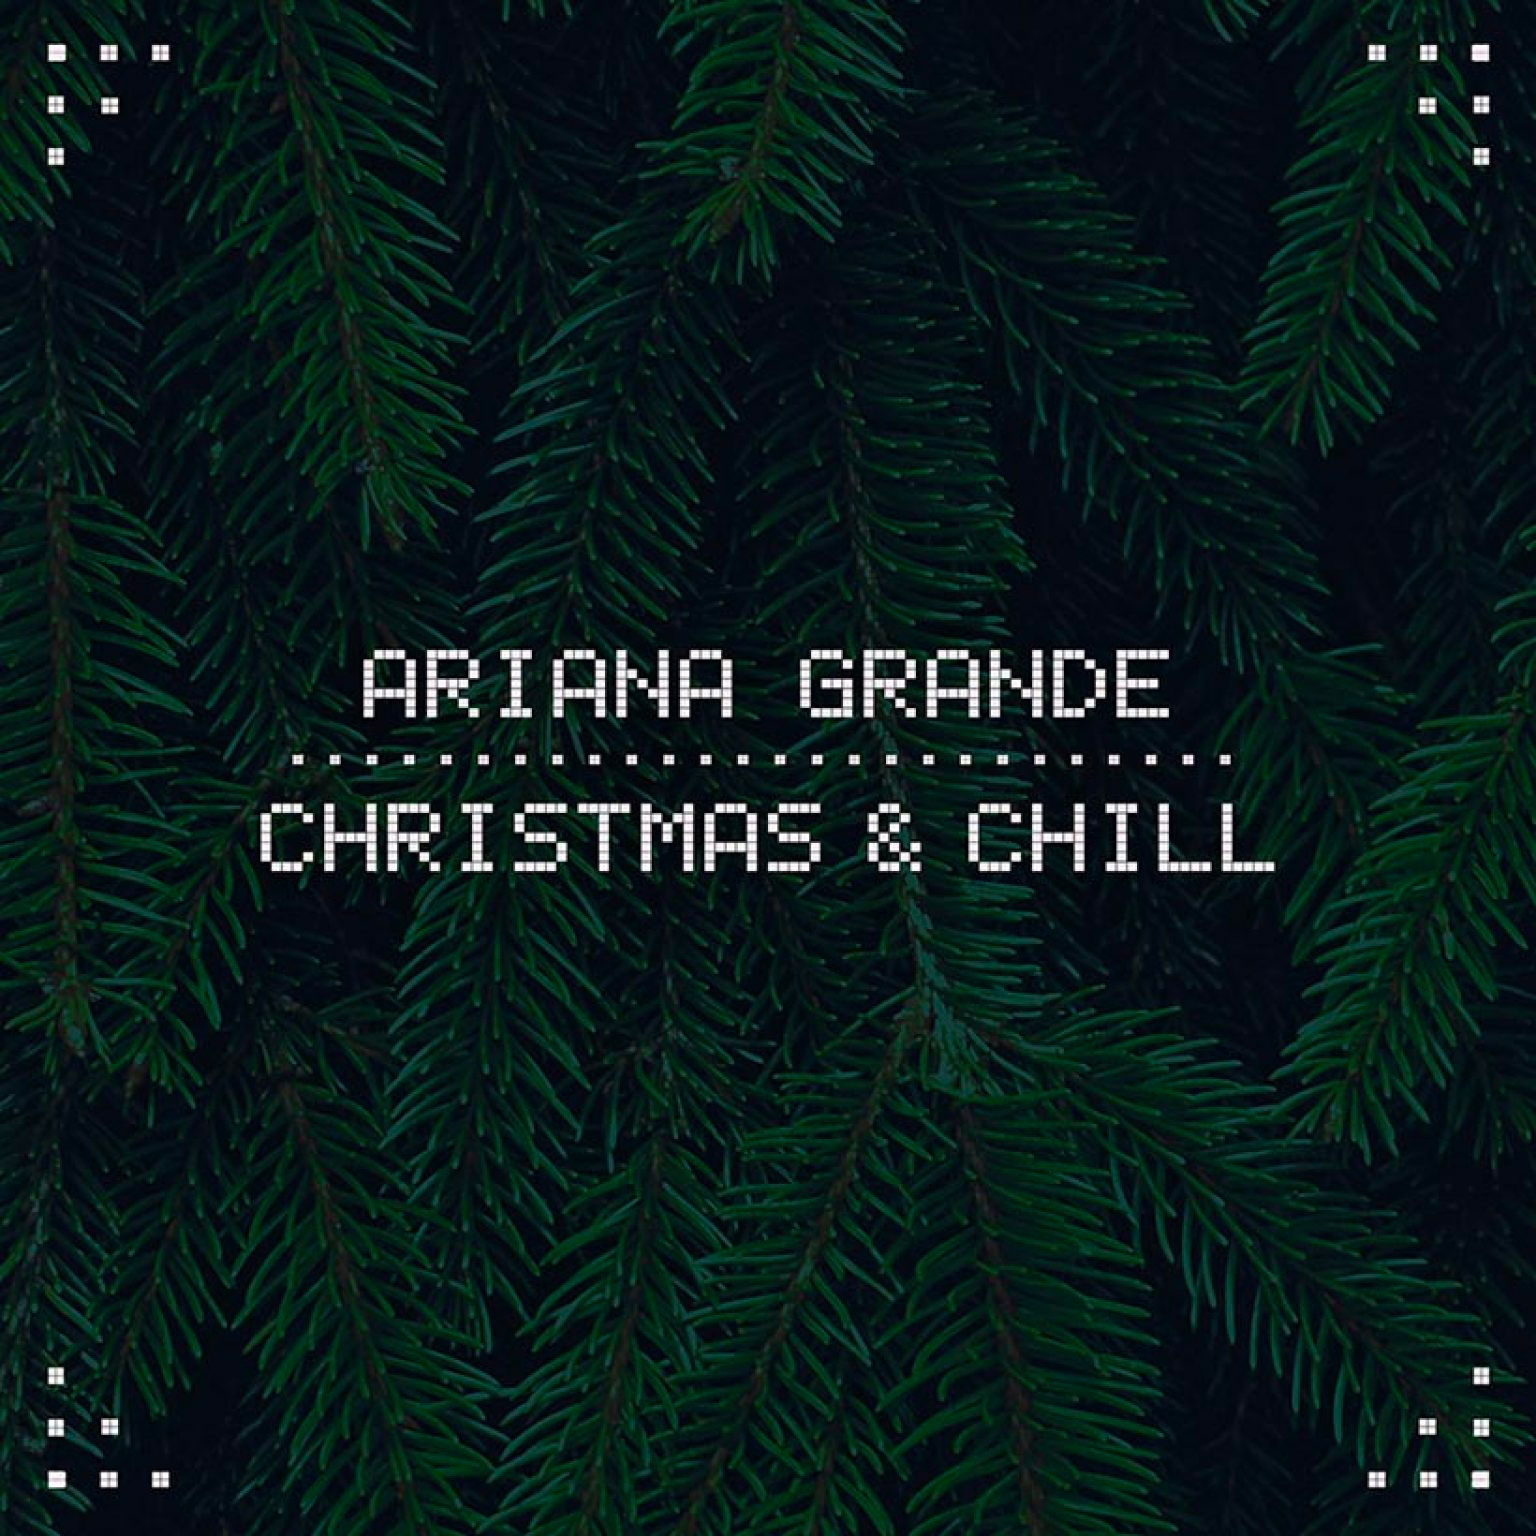 Ariana Grande Christmas & Chill